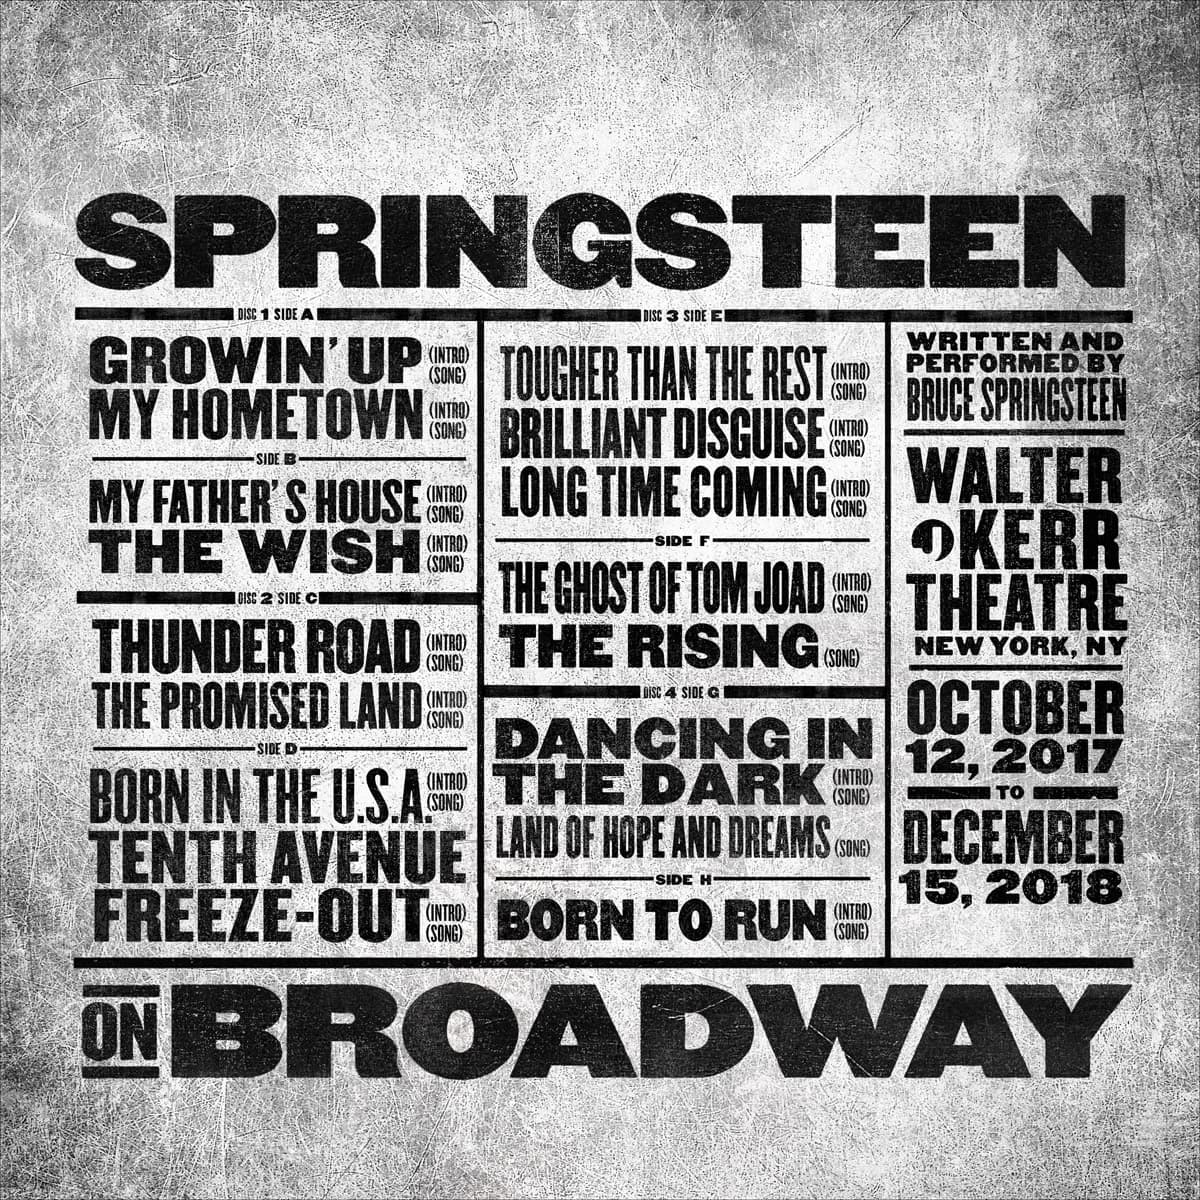 Bruce Springsteen Springsteen On Broadway back cover